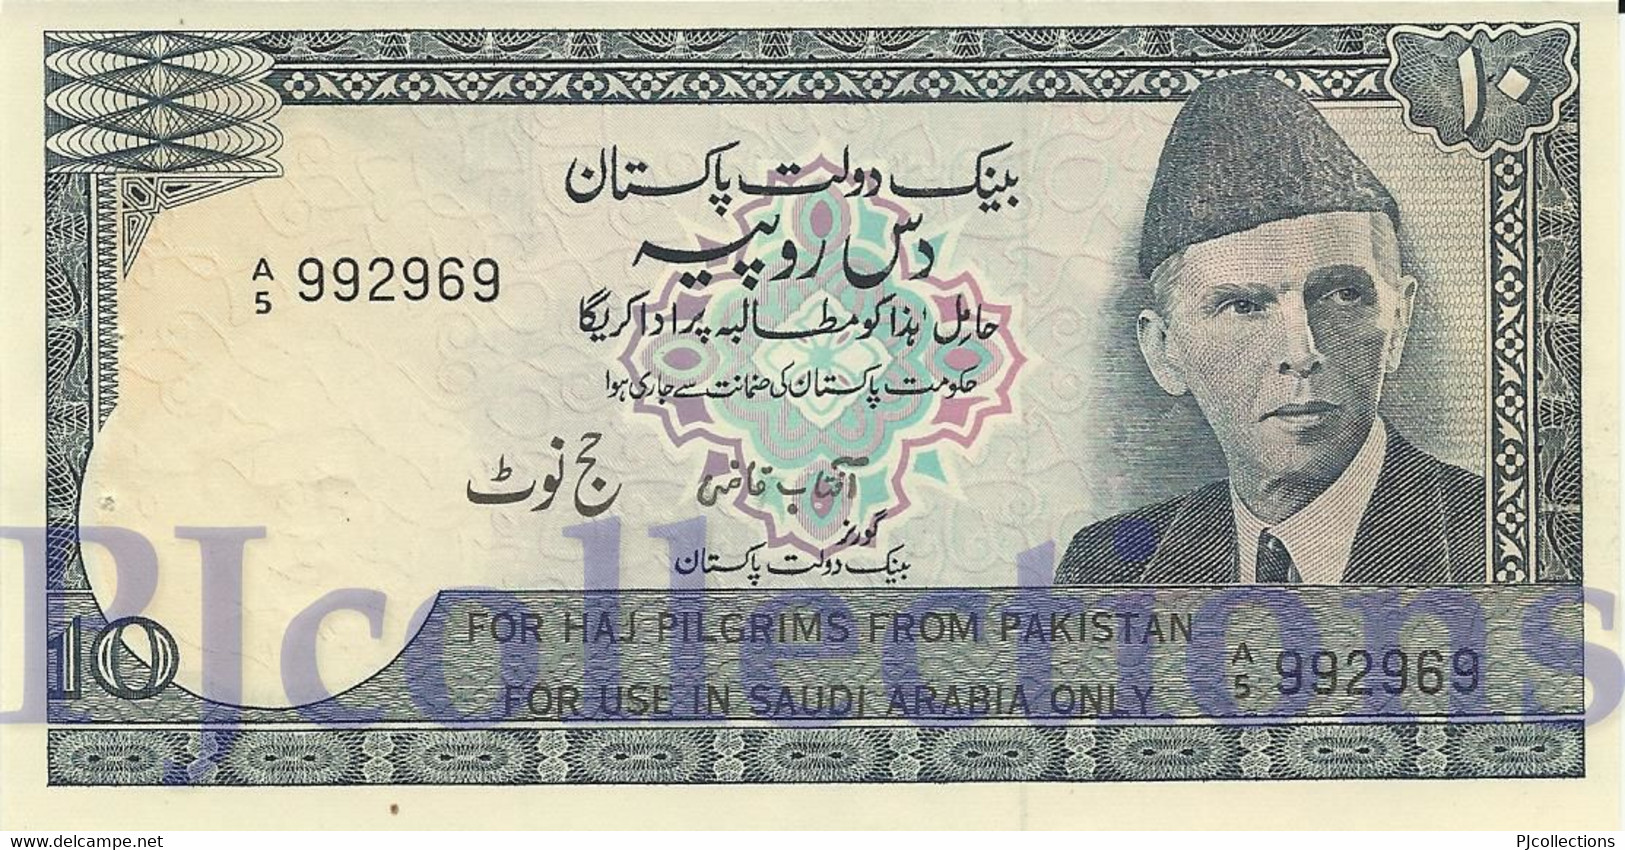 PAKISTAN 10 RUPEES 1978 PICK R6 UNC W/PINHOLES - Pakistan